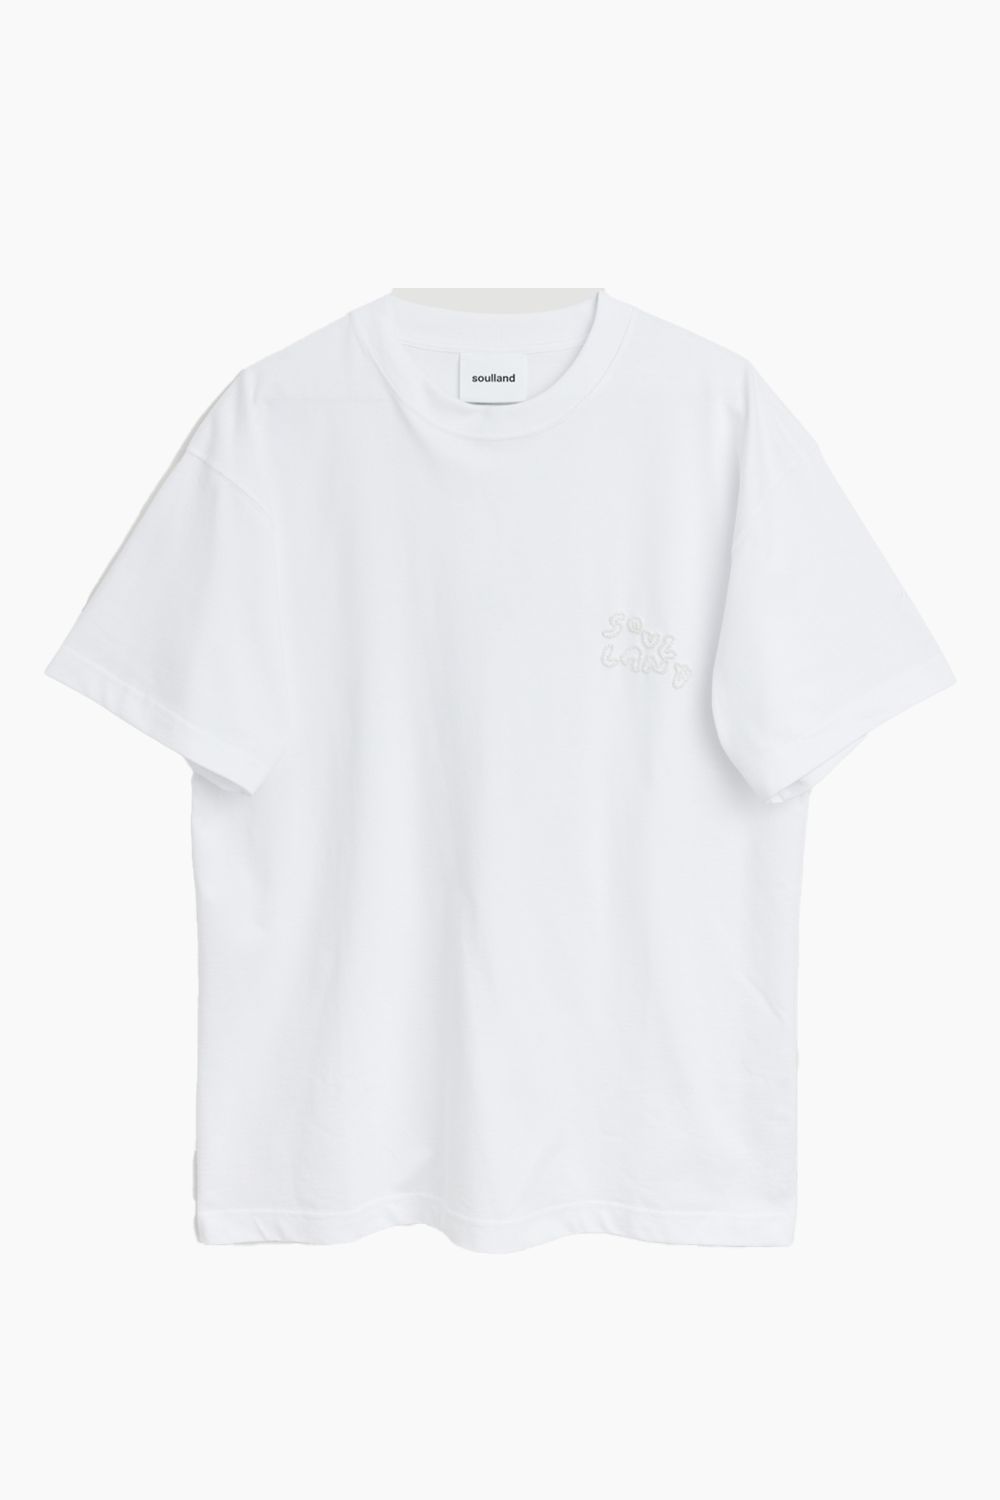 Se Kai T-shirt Beaded Logo - White - Soulland - Hvid XXS/XS hos QNTS.dk